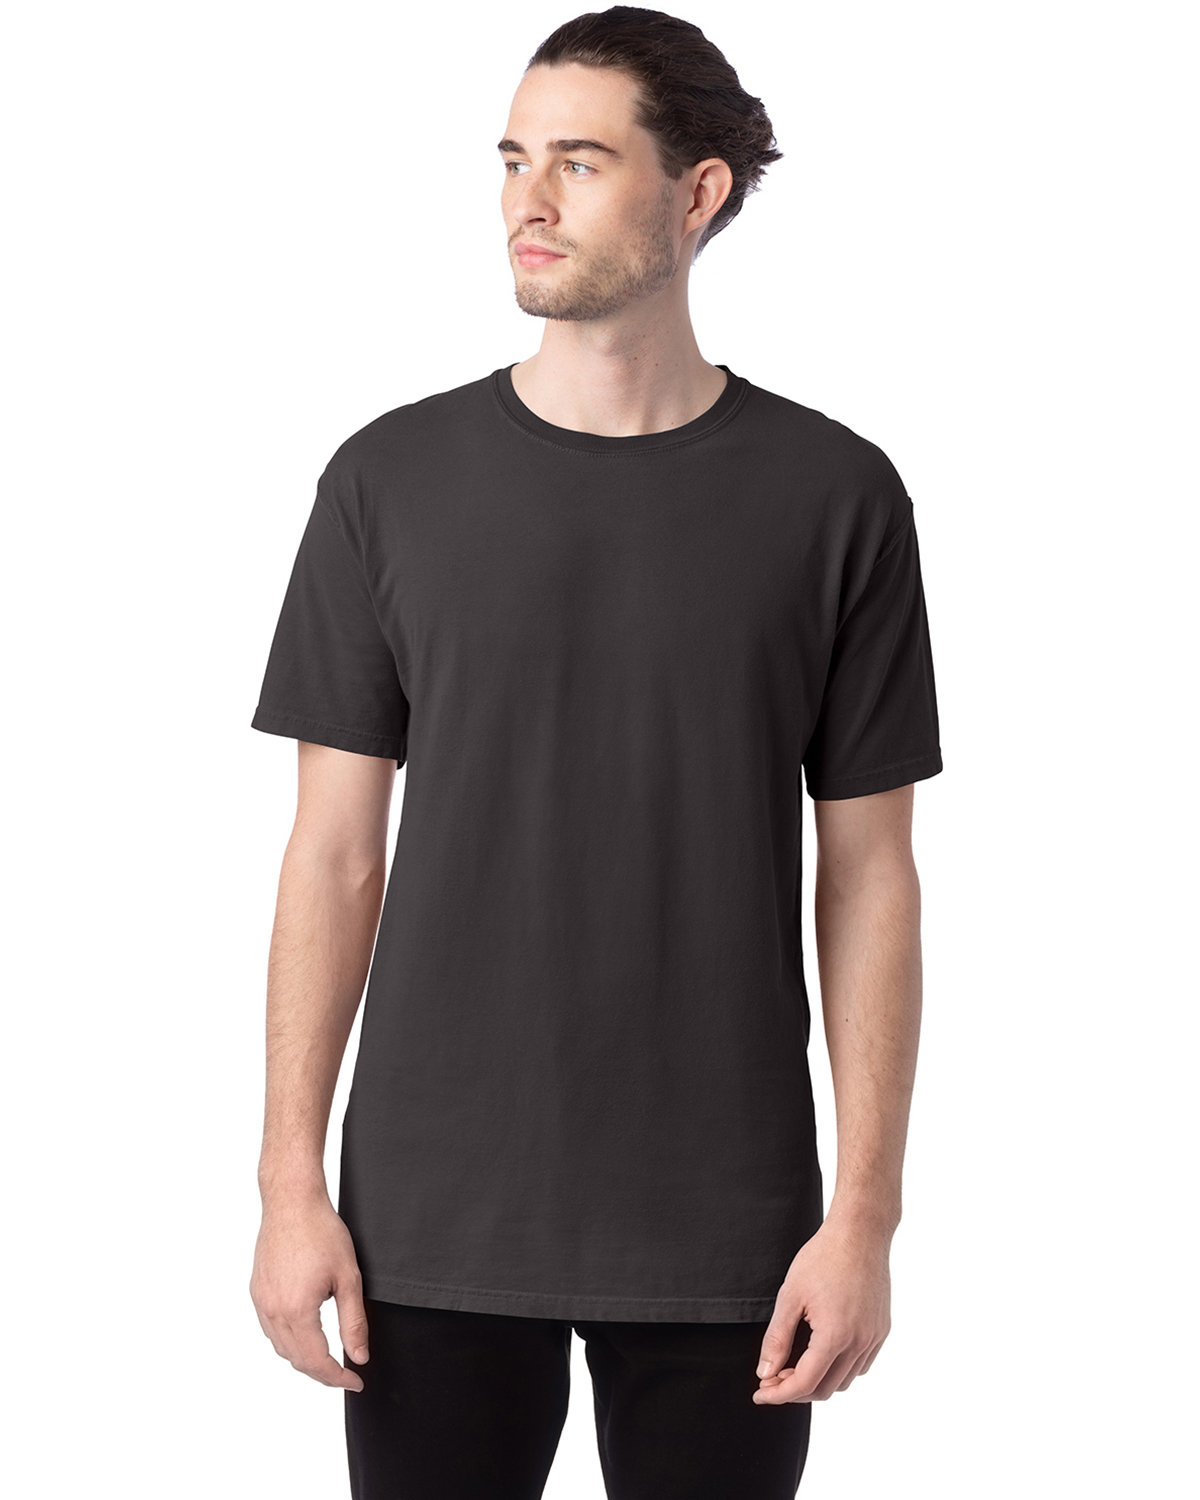 ComfortWash by Hanes Men's Garment-Dyed T-Shirt NEW RAILROAD 